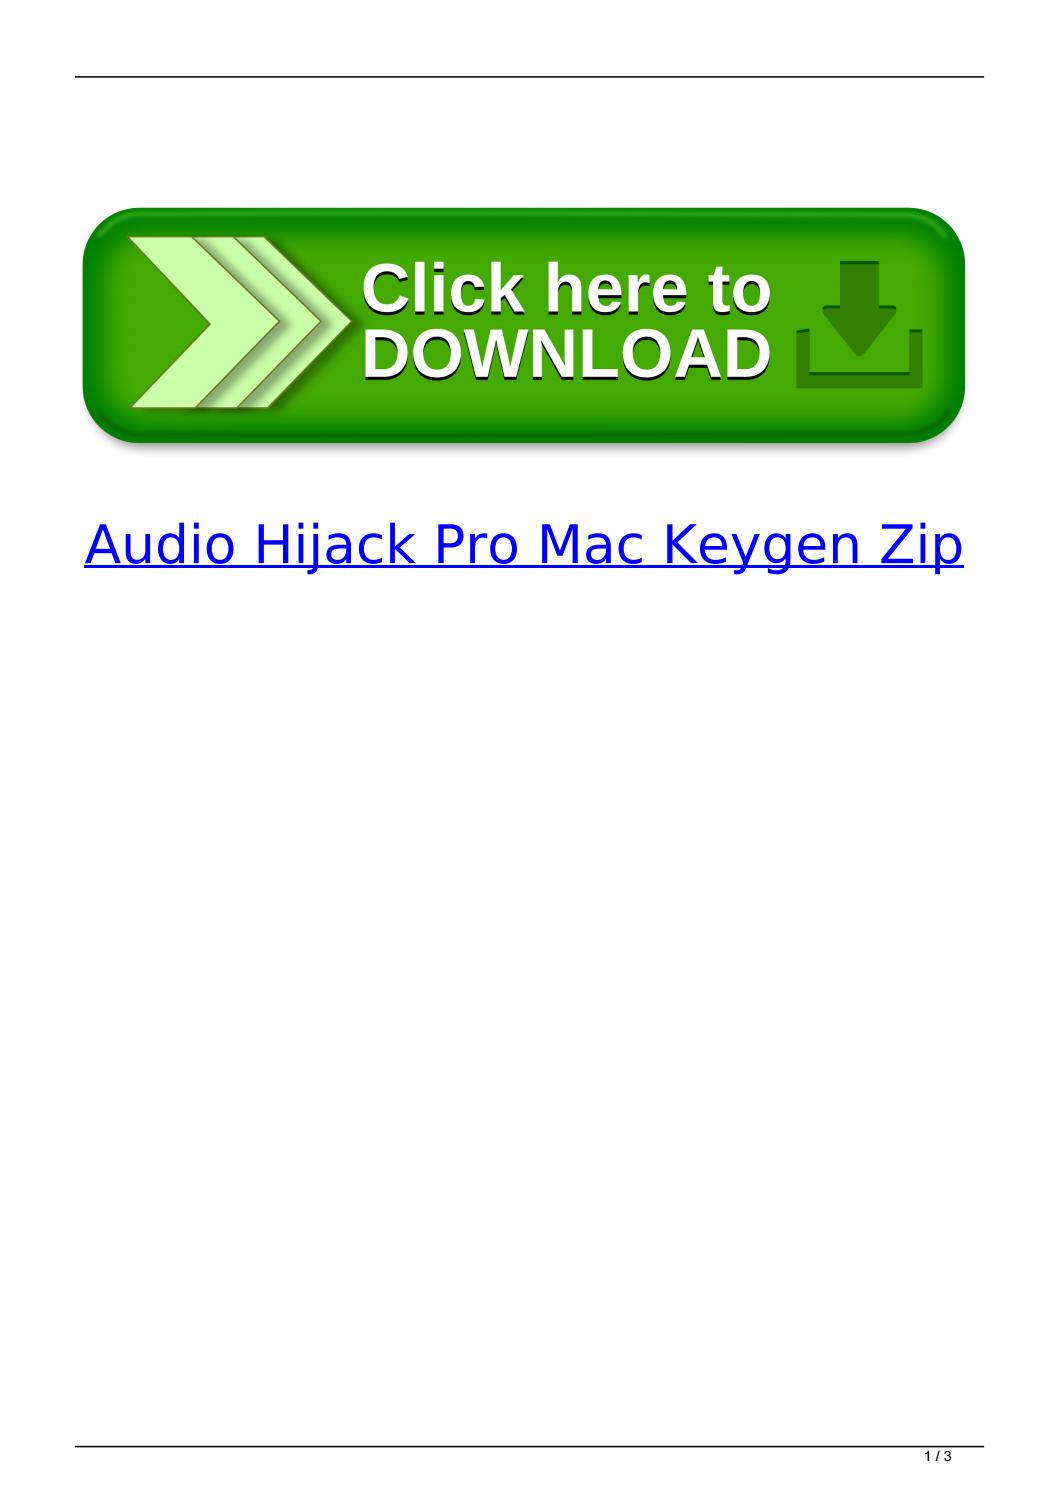 Audio Hijack Pro Crack Mac